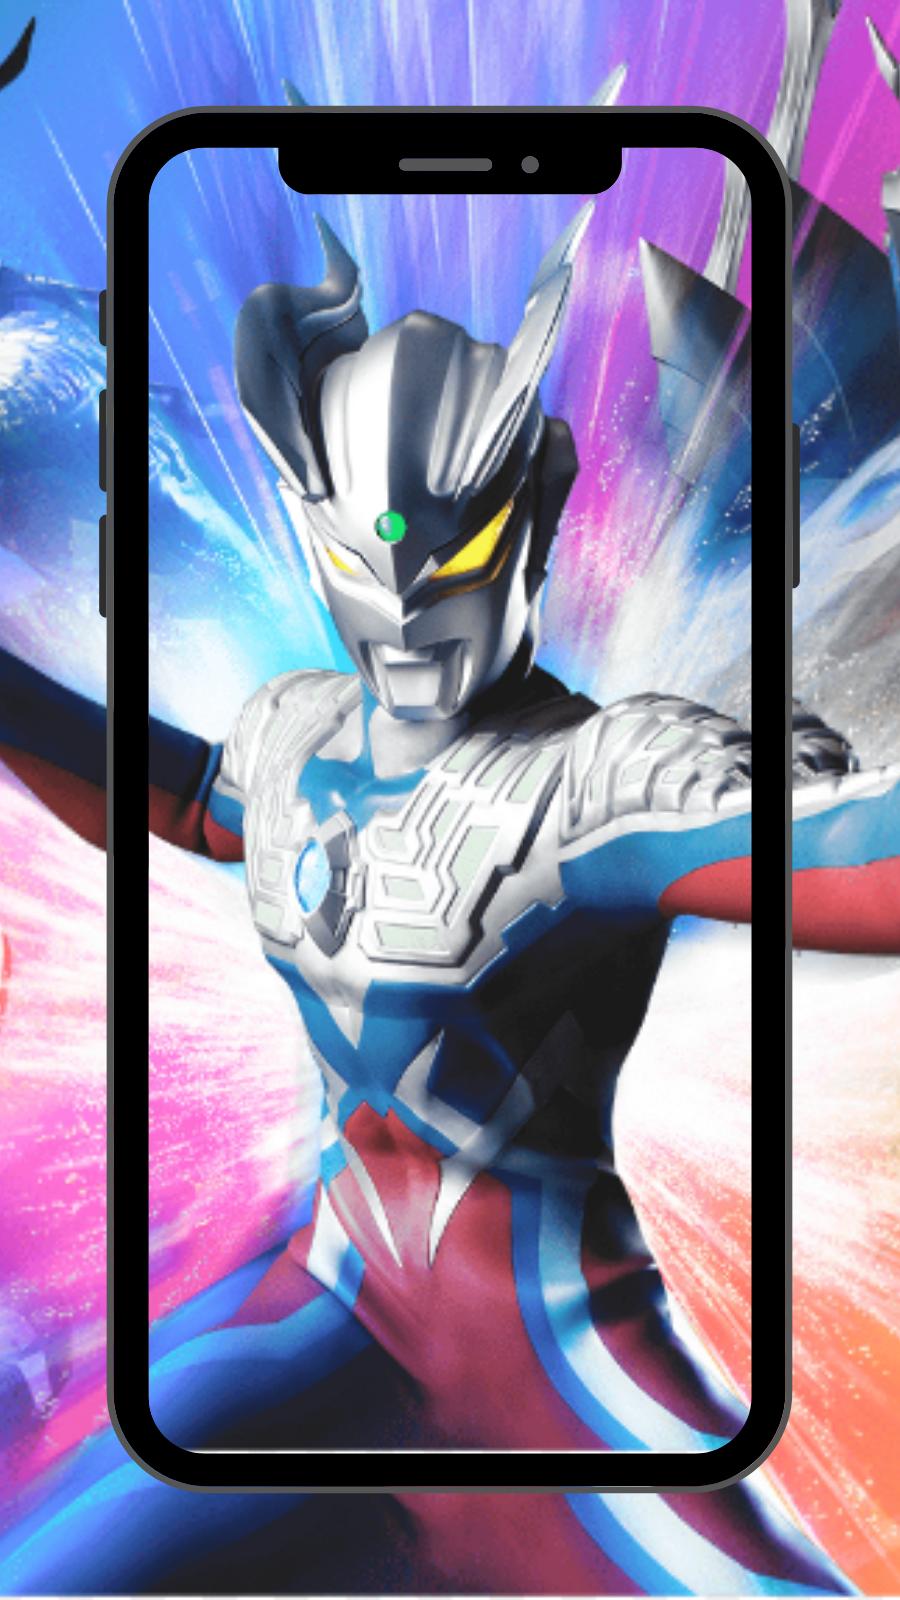 Amazing Ultraman Zero Wallpaper Hd For Android Apk Download